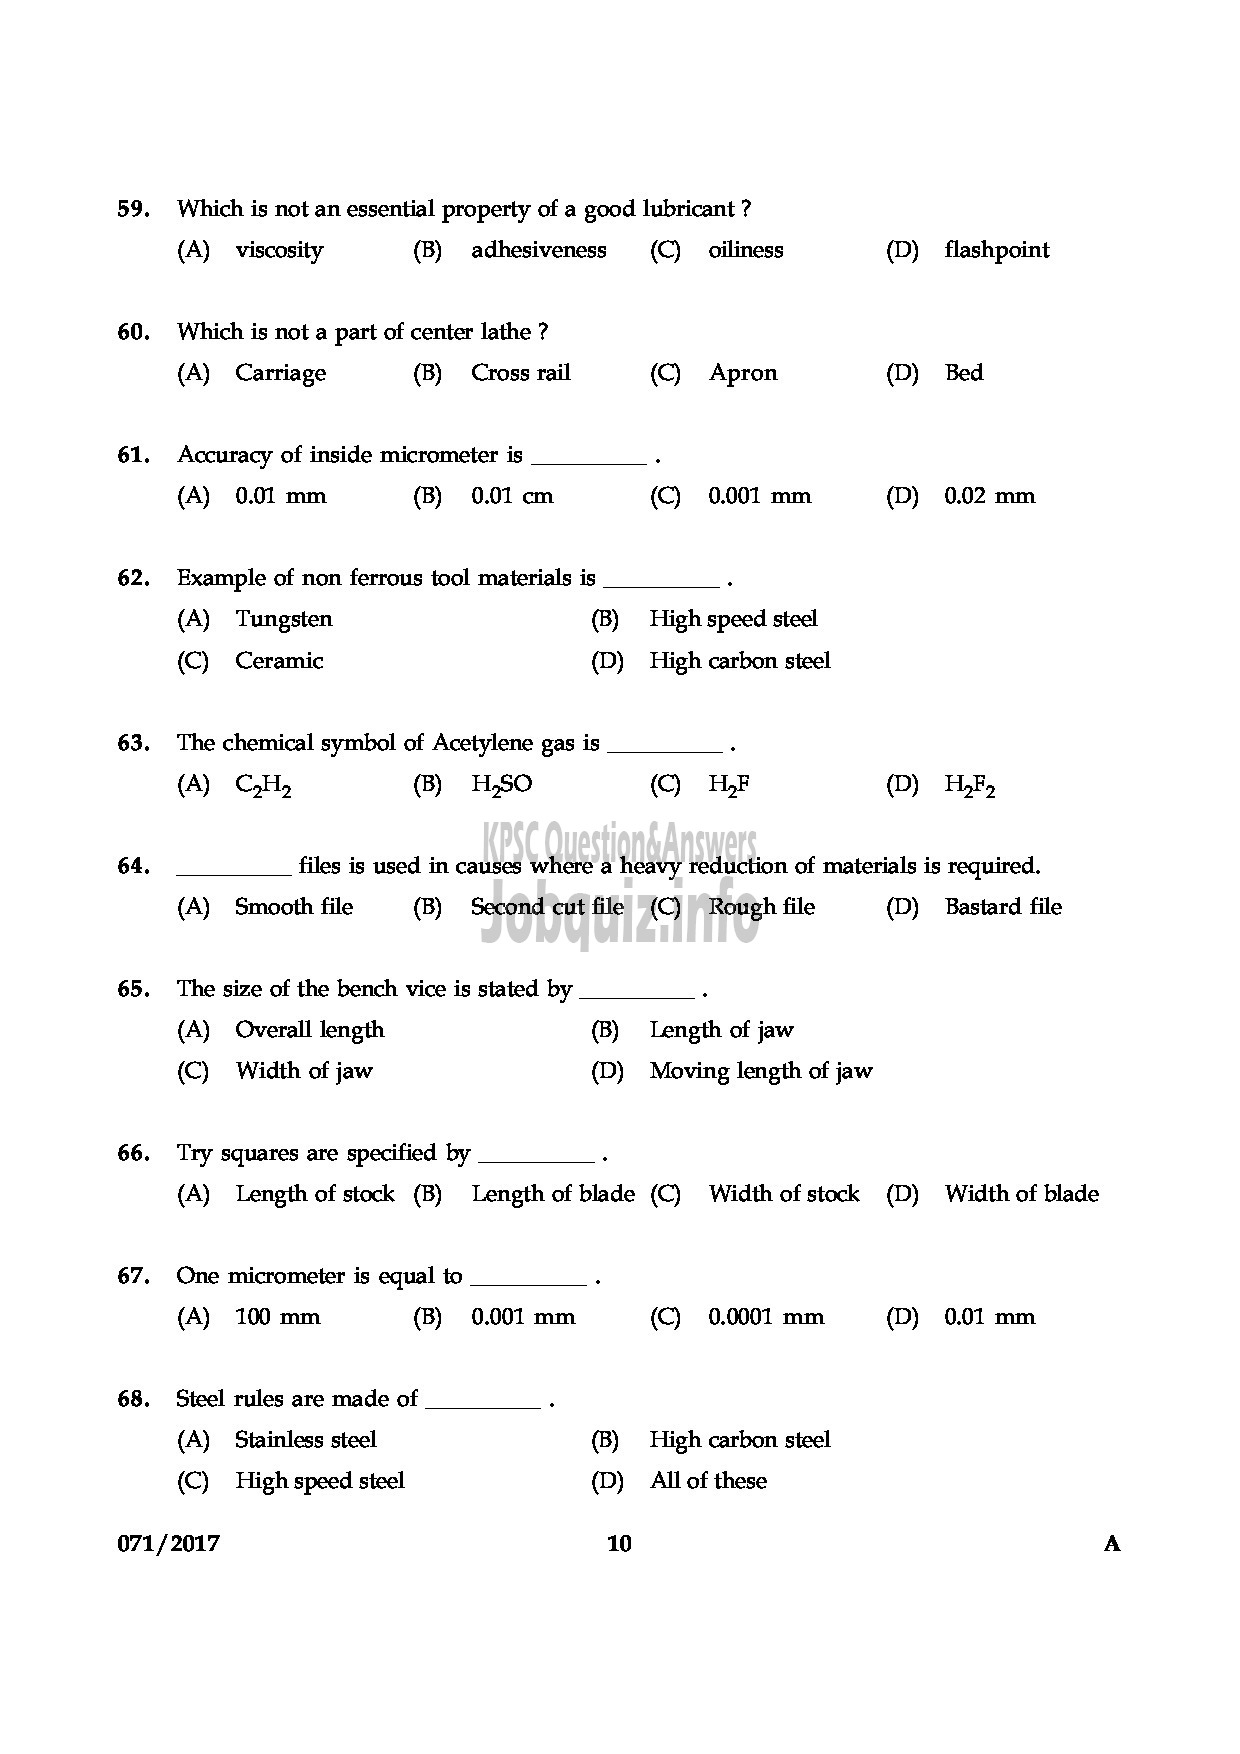 Kerala PSC Question Paper - MECHANICAL OPERATOR PHARMACEUTICAL CORPORATION IM KERALA LTD QUESTION PAPER QUESTION PAPER-9